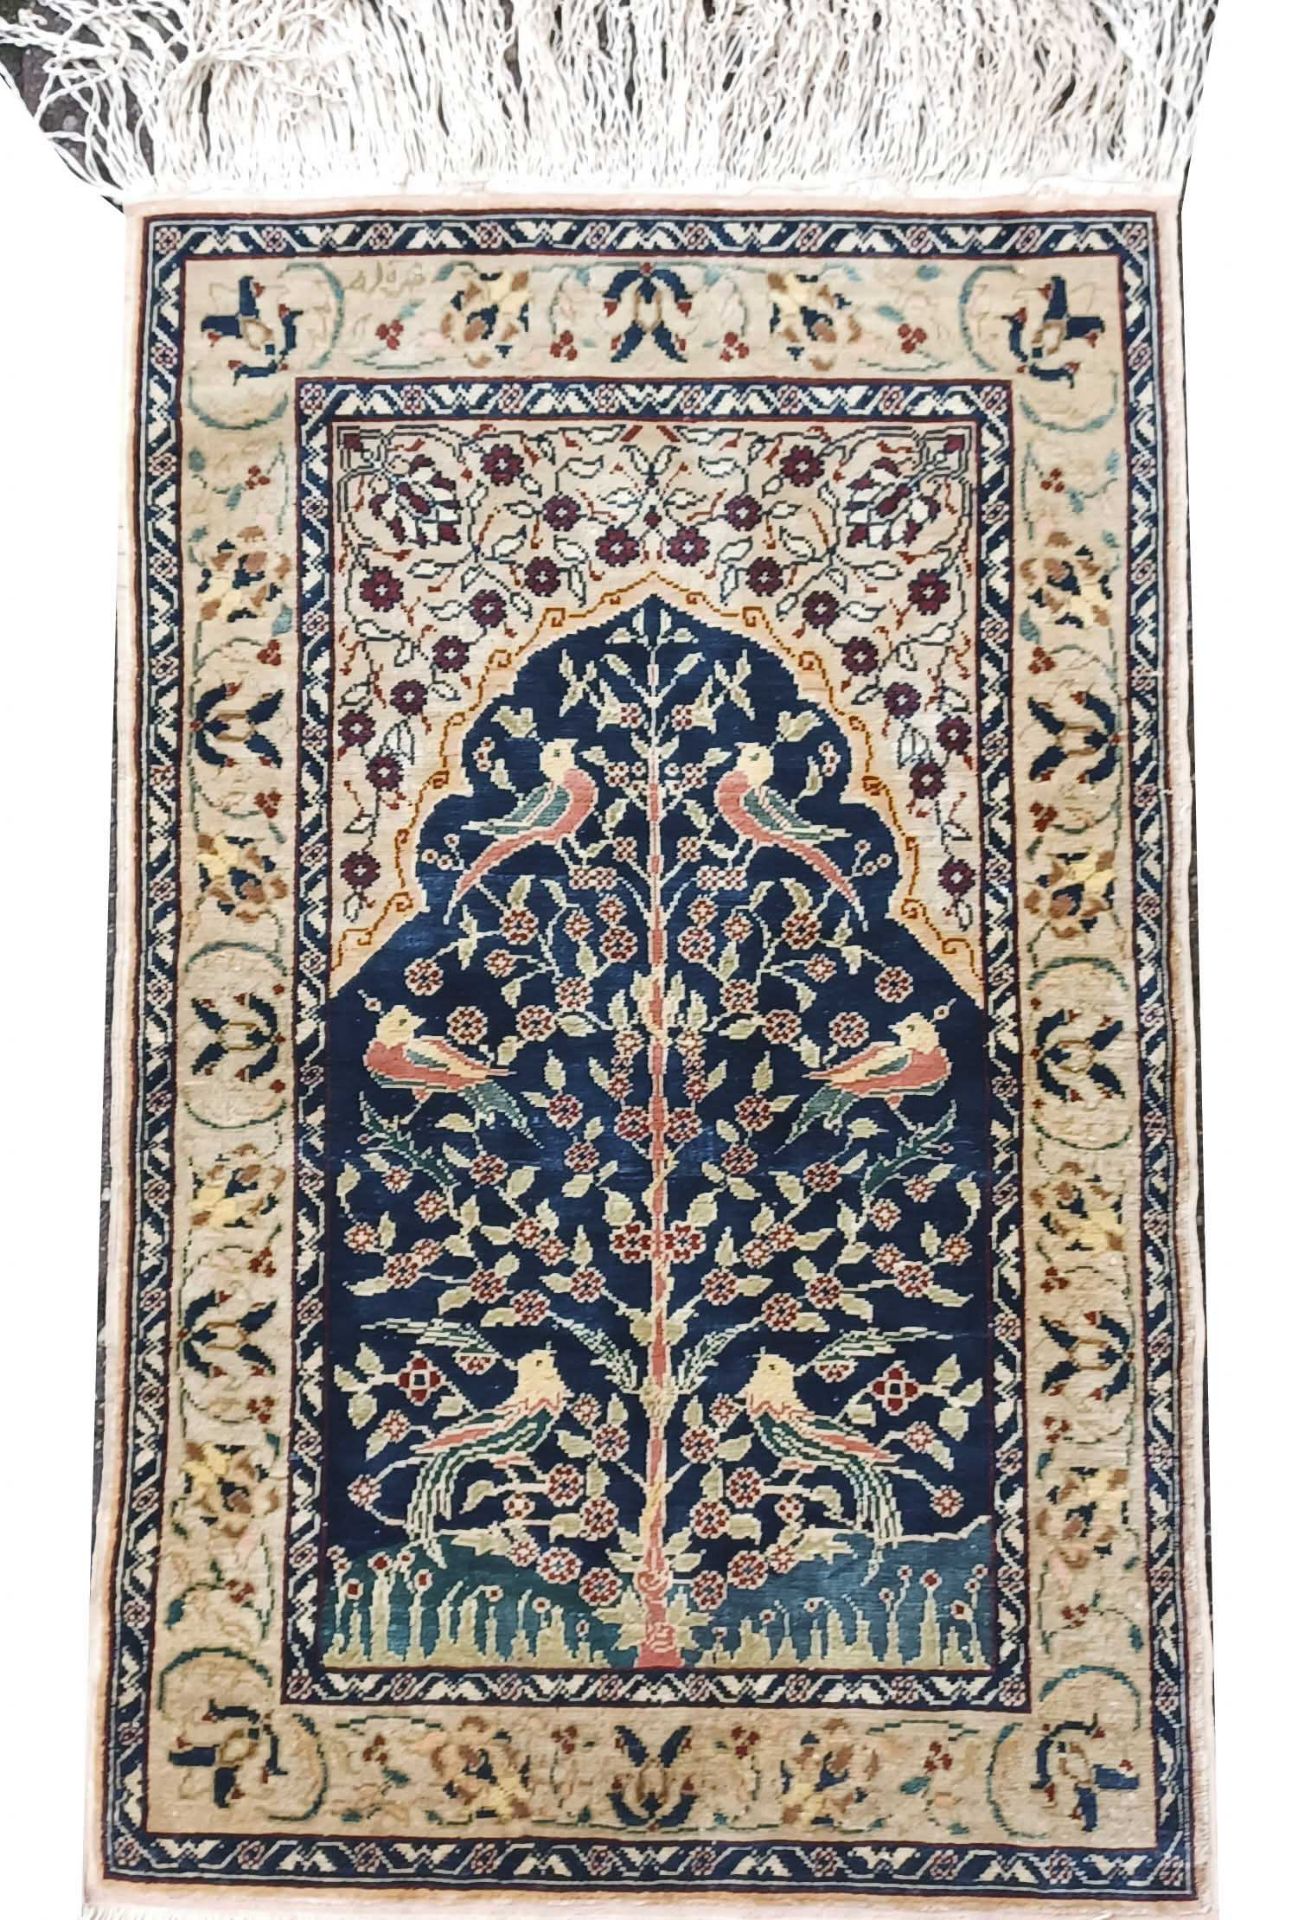 Carpet, Rug, Silk, prayer. Good condition, 60 x 38 cm